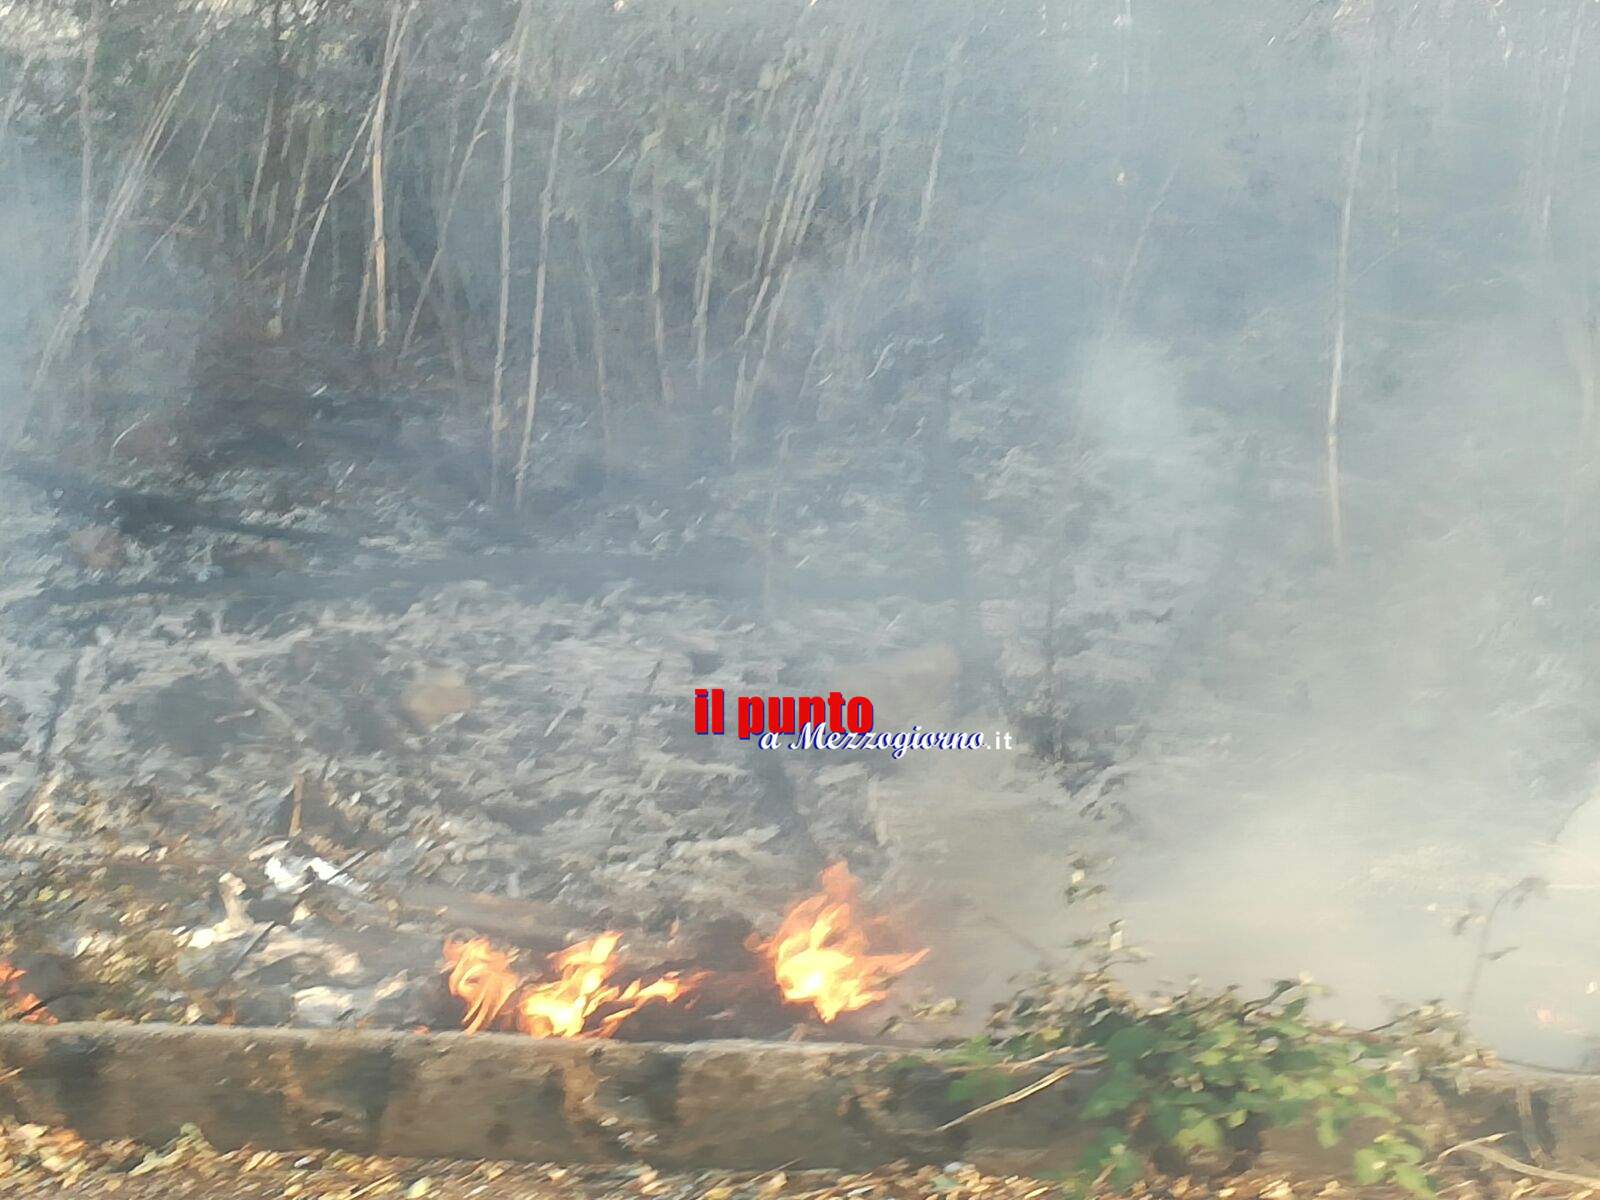 Animali usati torce torce per incendiare boschi, l’allarme di Aidaa